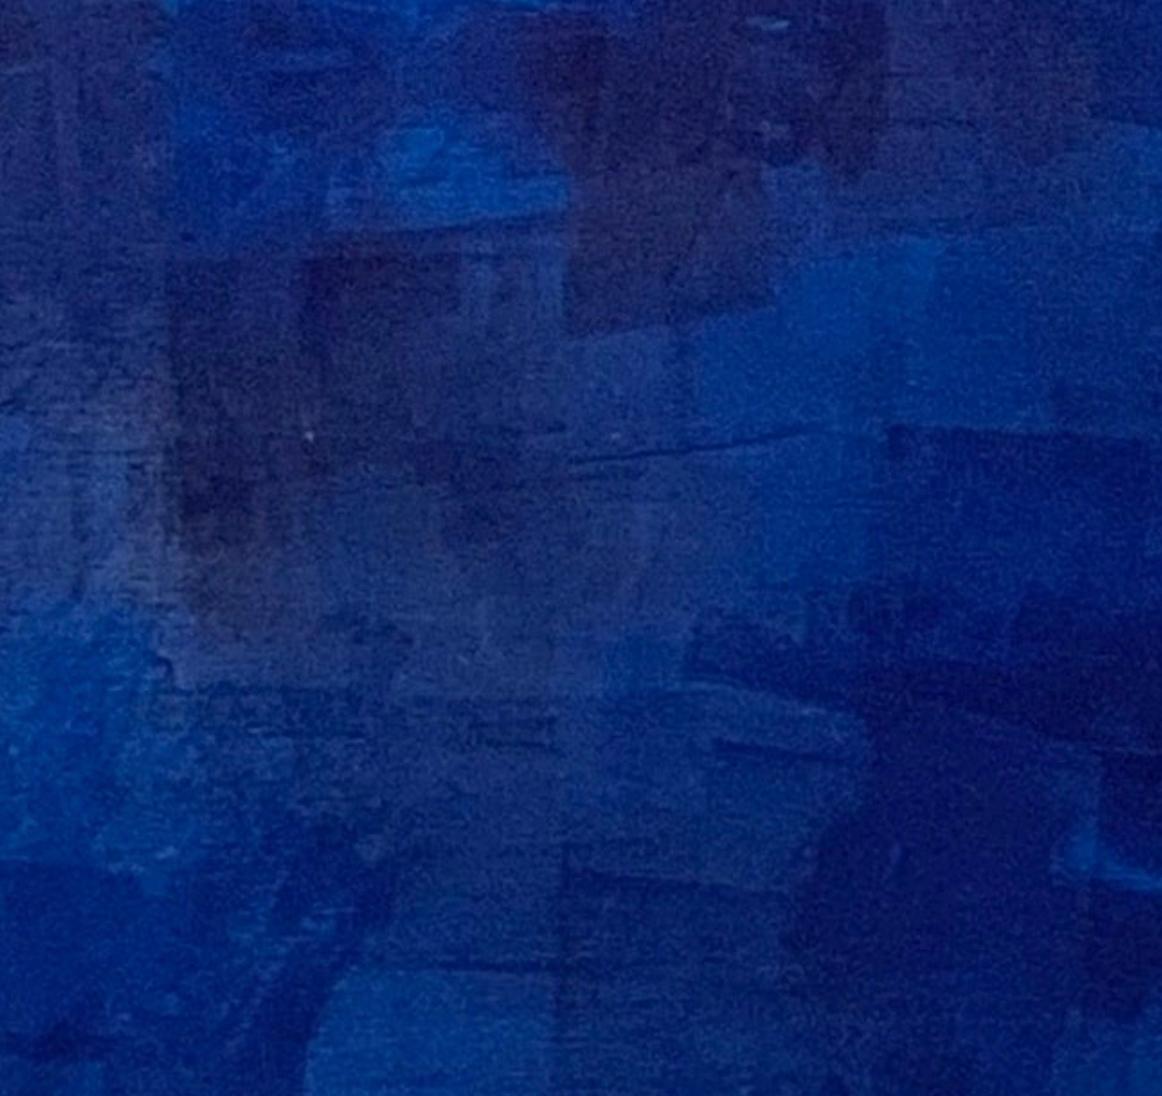 La mer profonde, océan contemporain, bleu foncé, essence de l'océan, art de Floride en vente 4